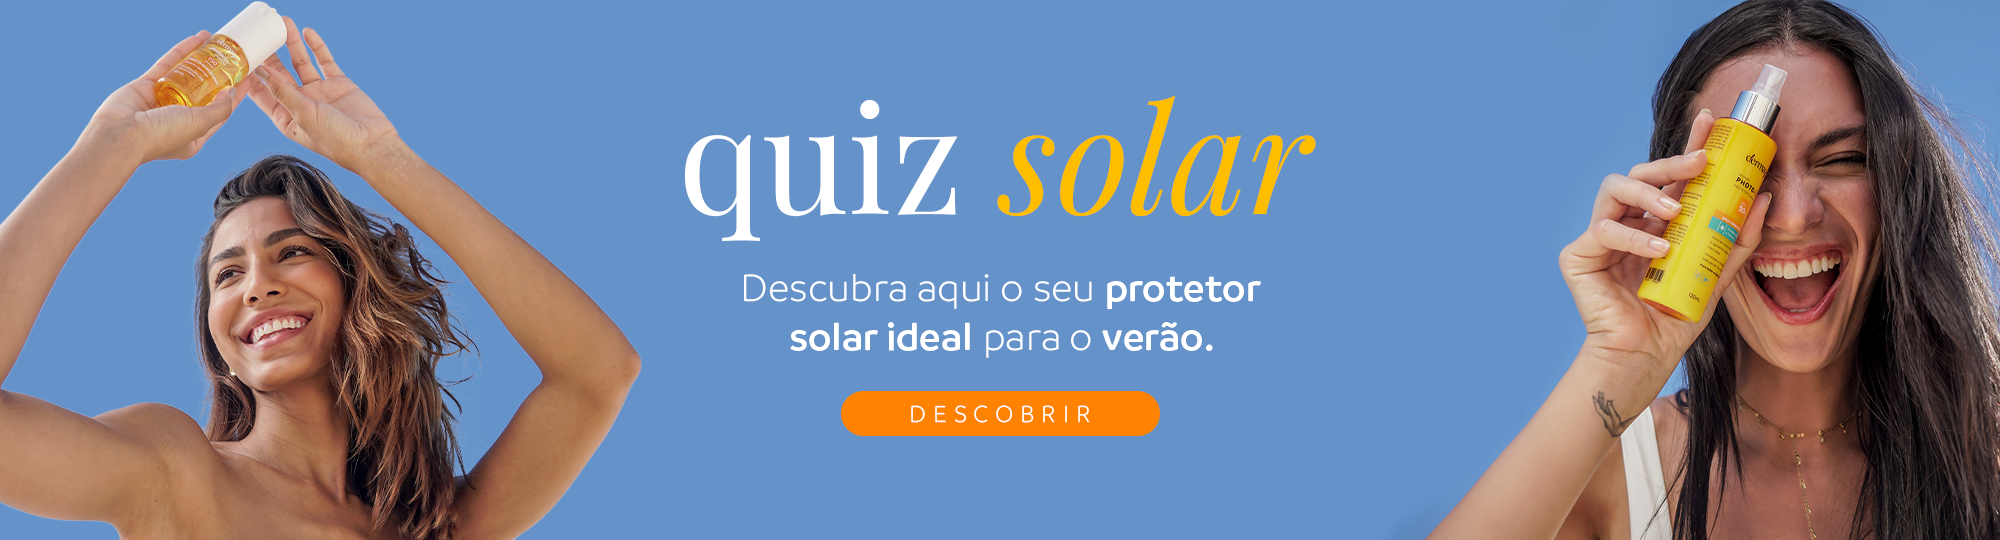 quiz solar